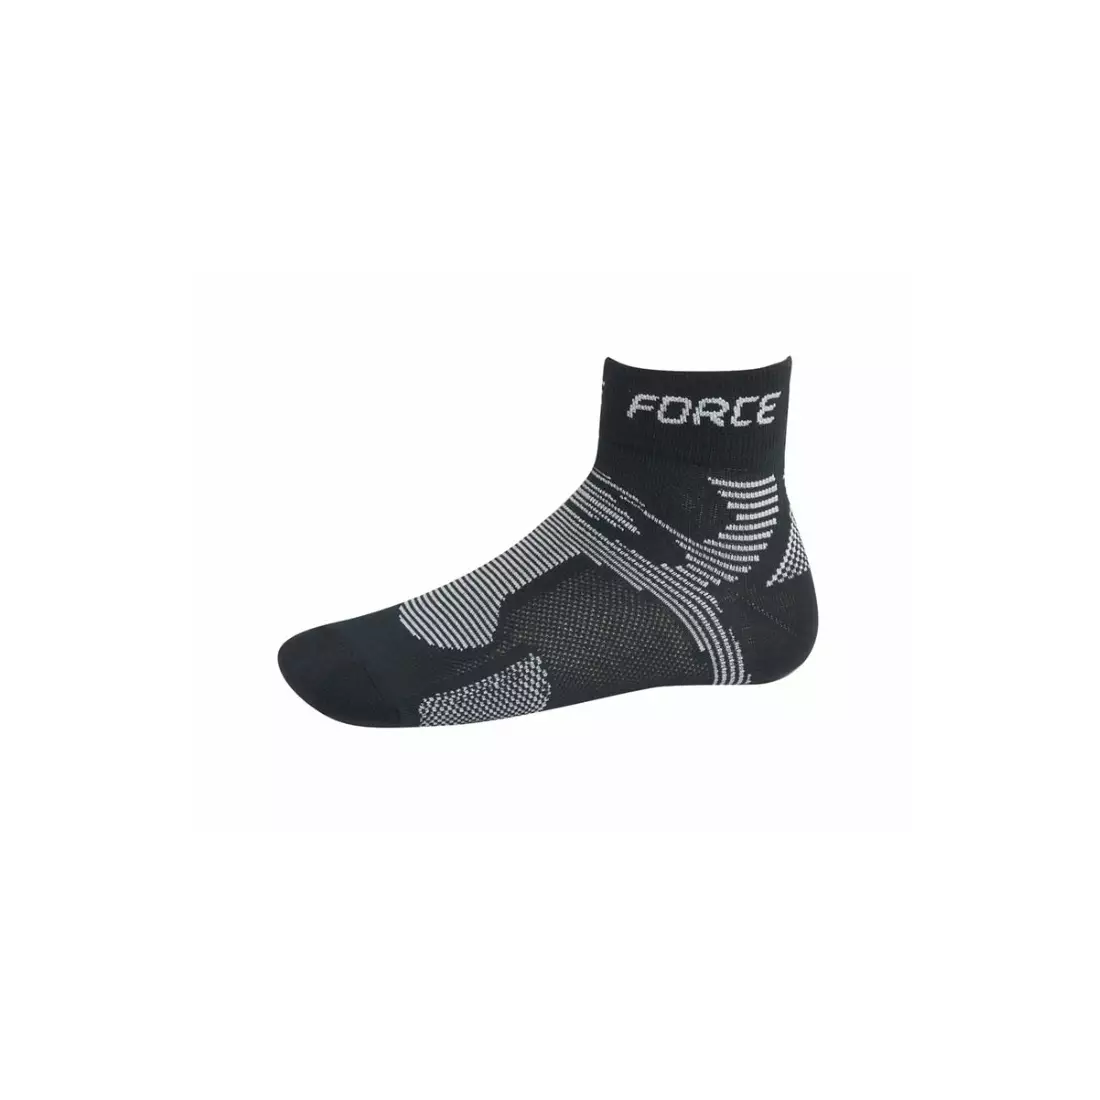 FORCE 2 COOLMAX sports socks 901023/901027 - black and gray